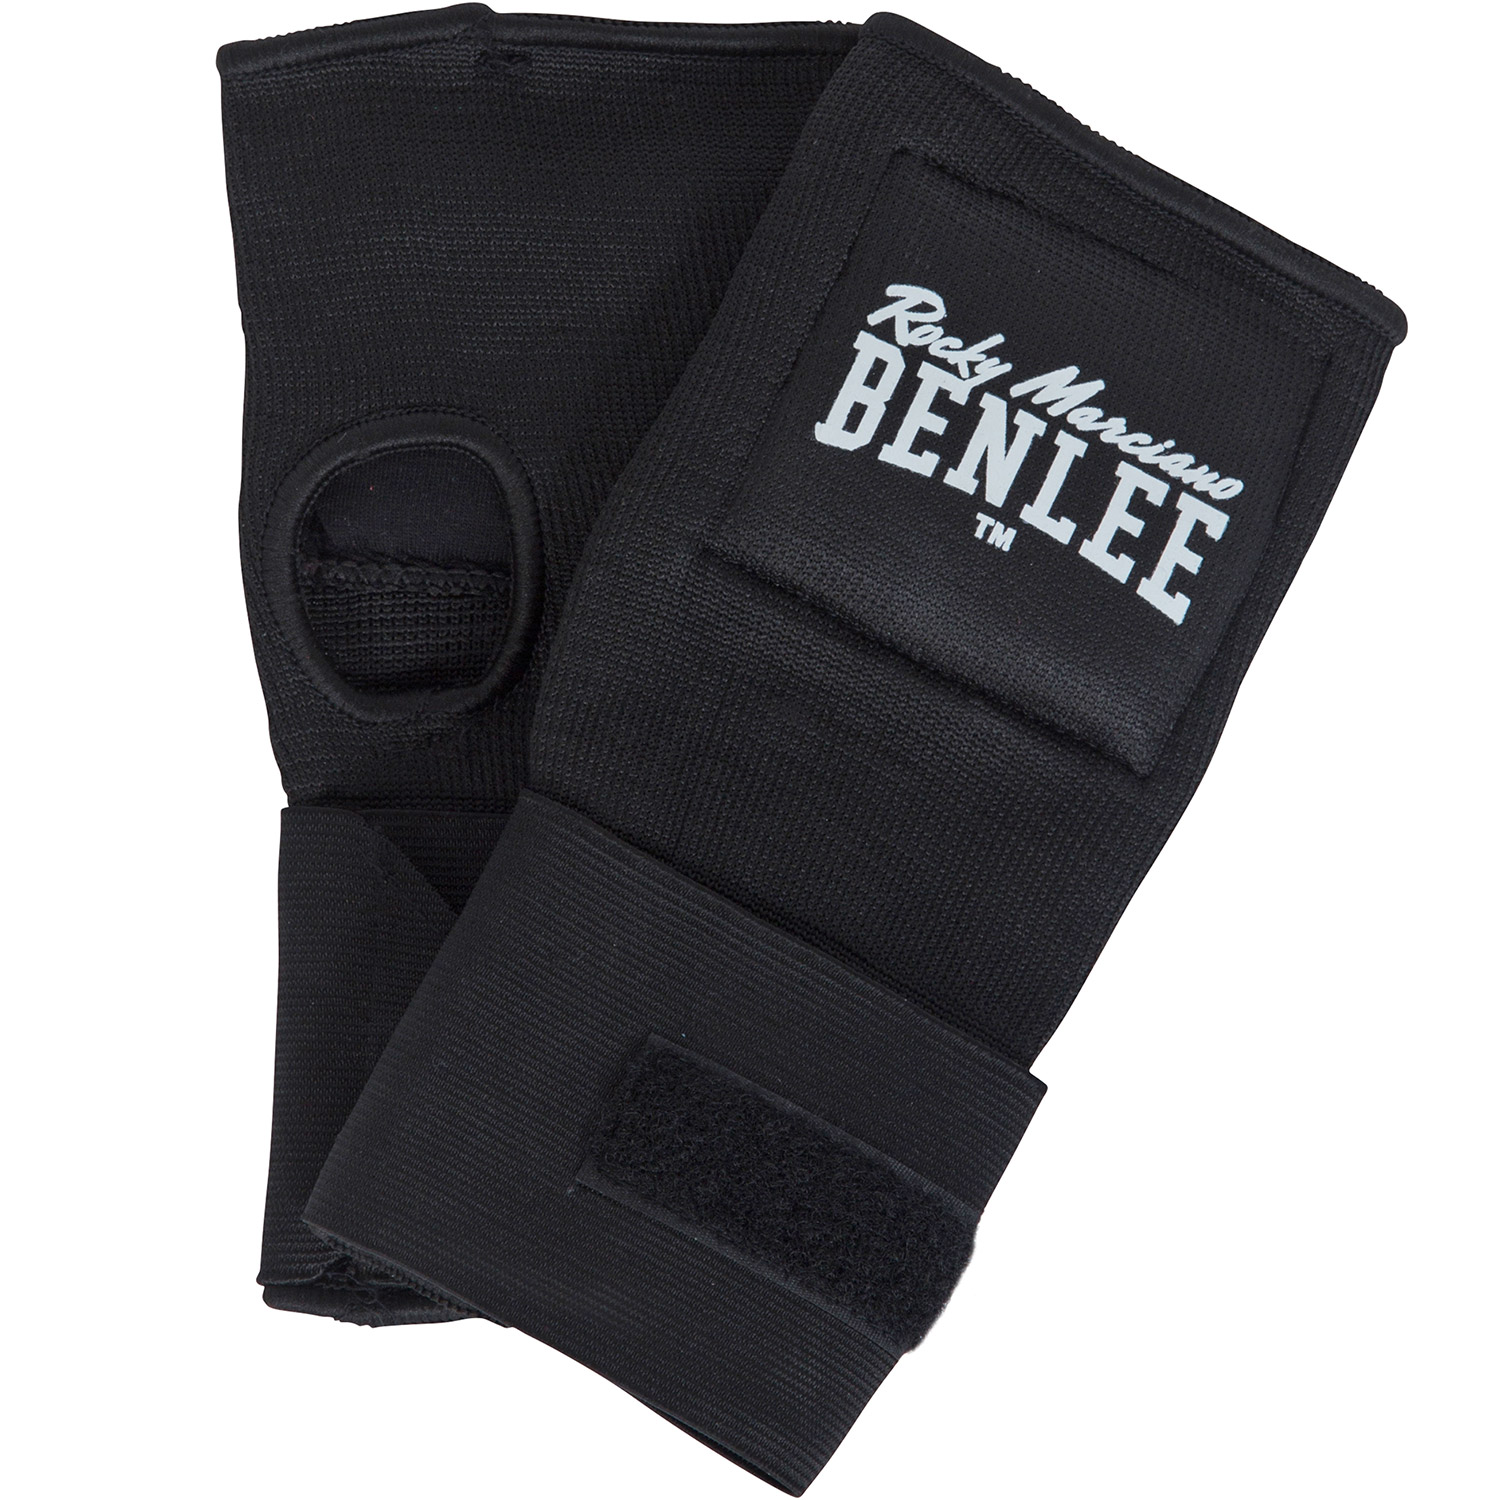 Inner glove Benlee black